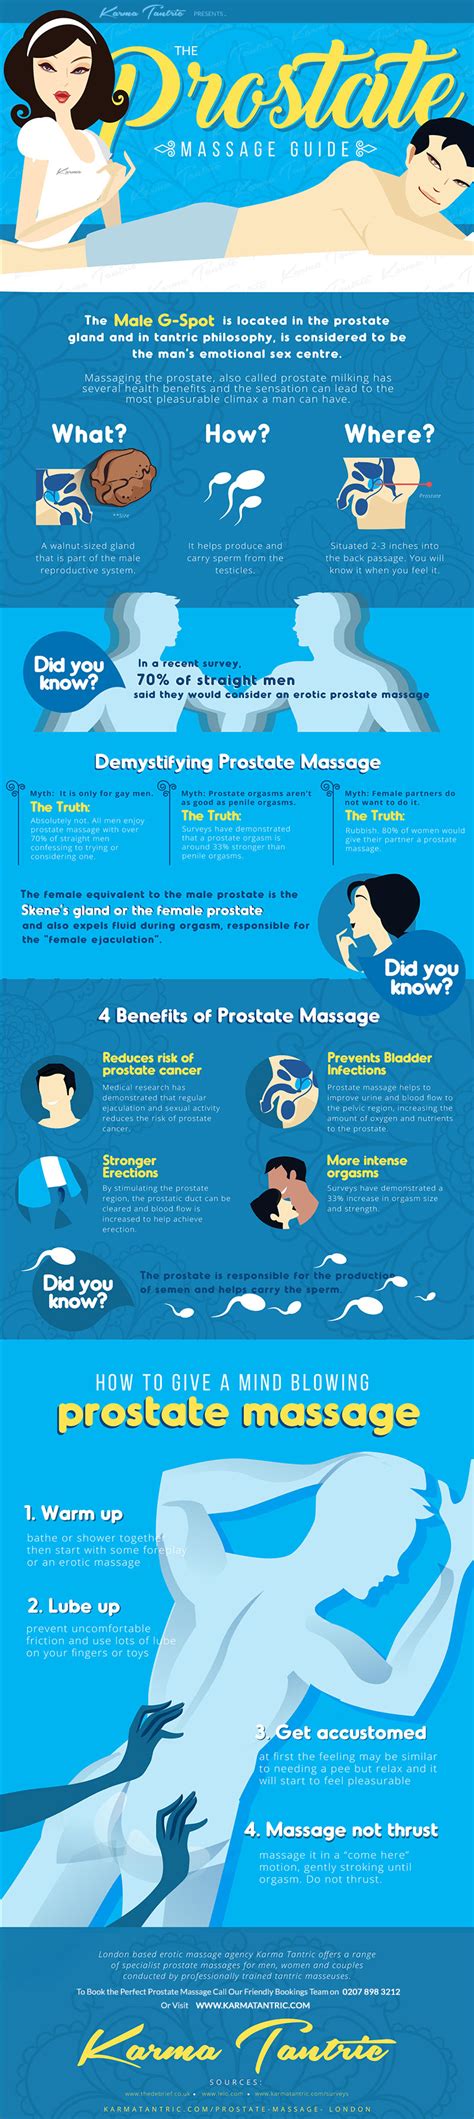 Massage Prostate Man Telegraph